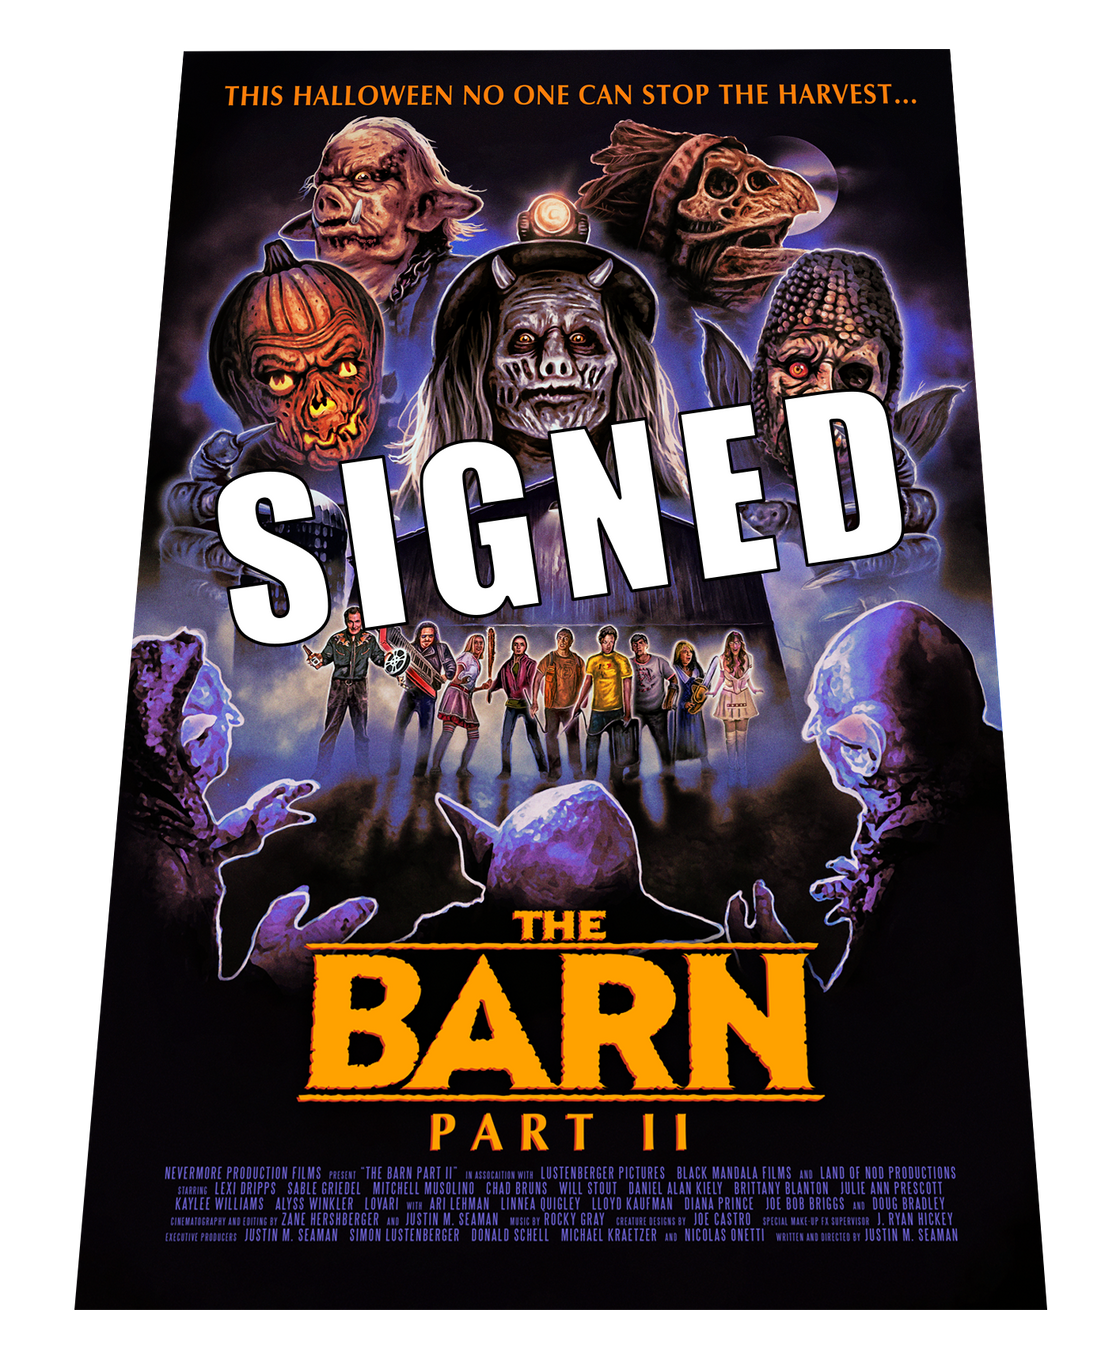 The Barn Part II - Poster - Sadist Art Designs Poster (11x17)